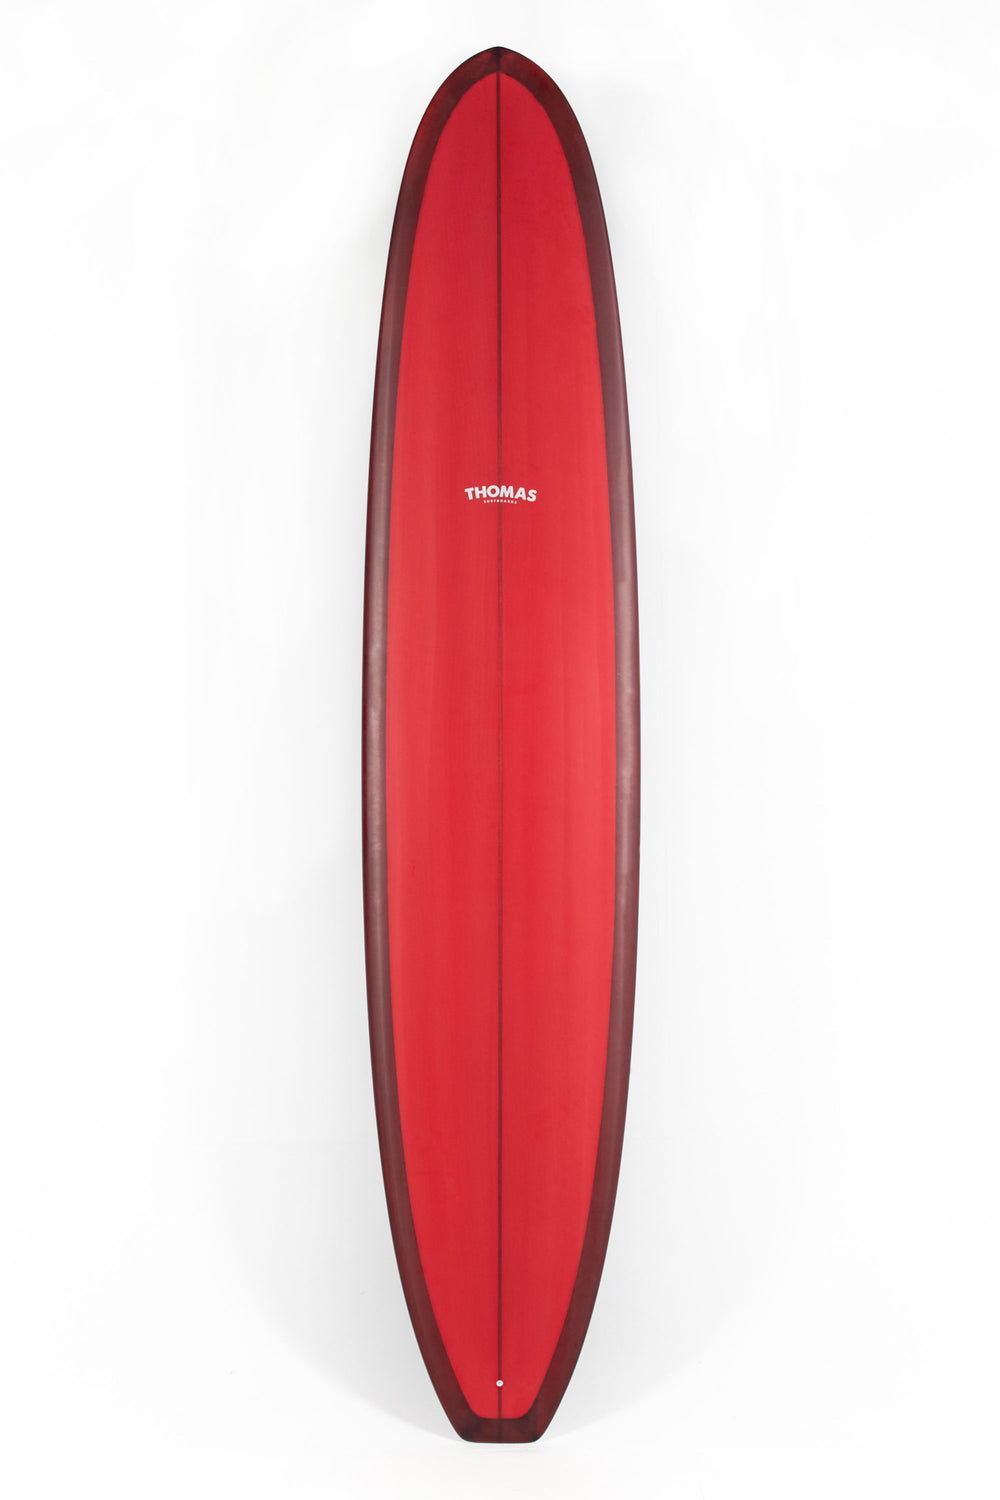 Pukas Surf Shop - Thomas Surfboards - HARRISON - 9'6